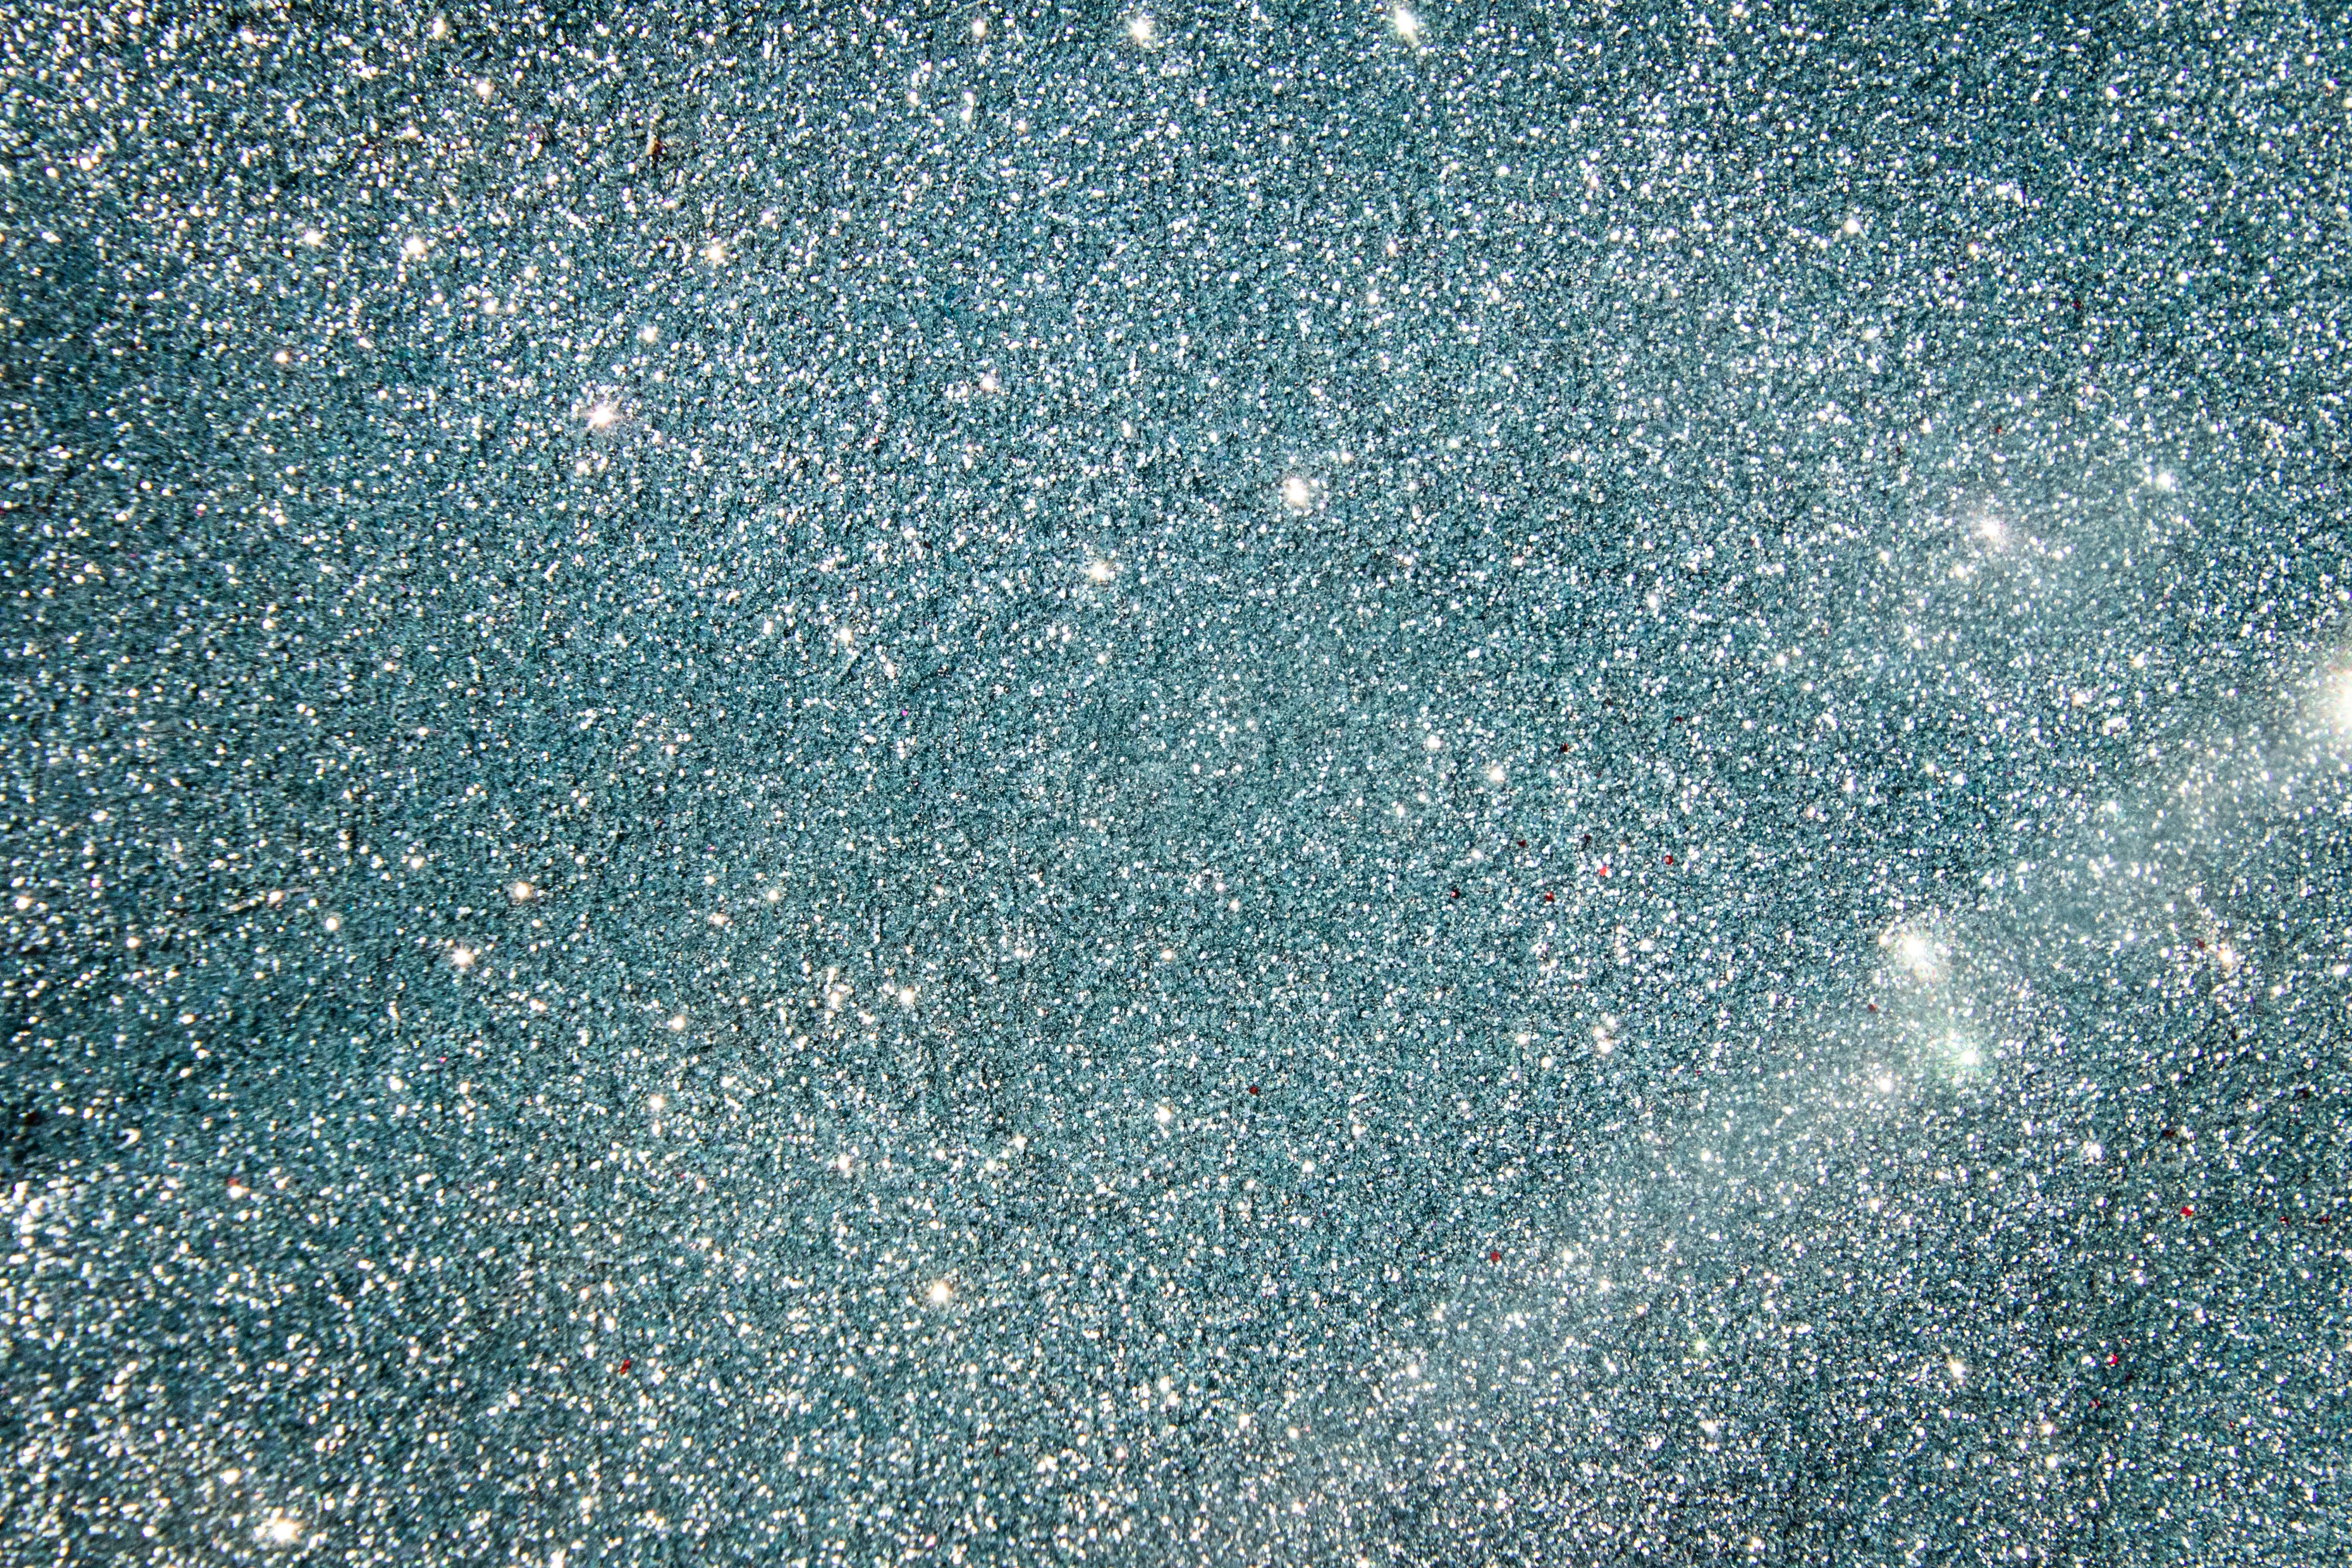 48+] Blue Sparkle Wallpaper - WallpaperSafari